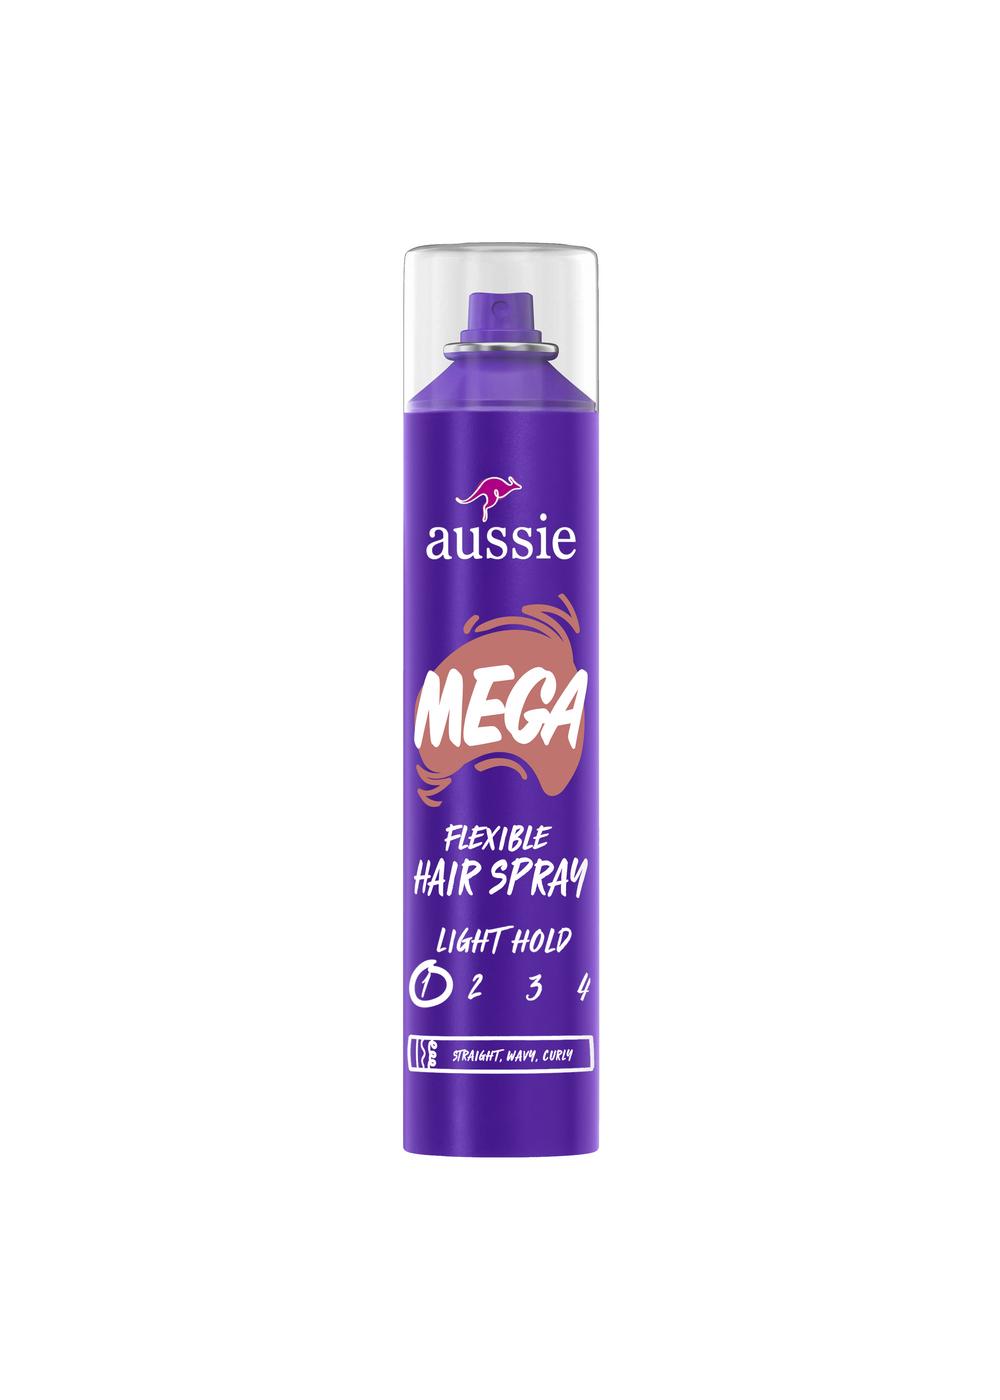 Aussie Mega Flexible Hair Spray; image 3 of 10